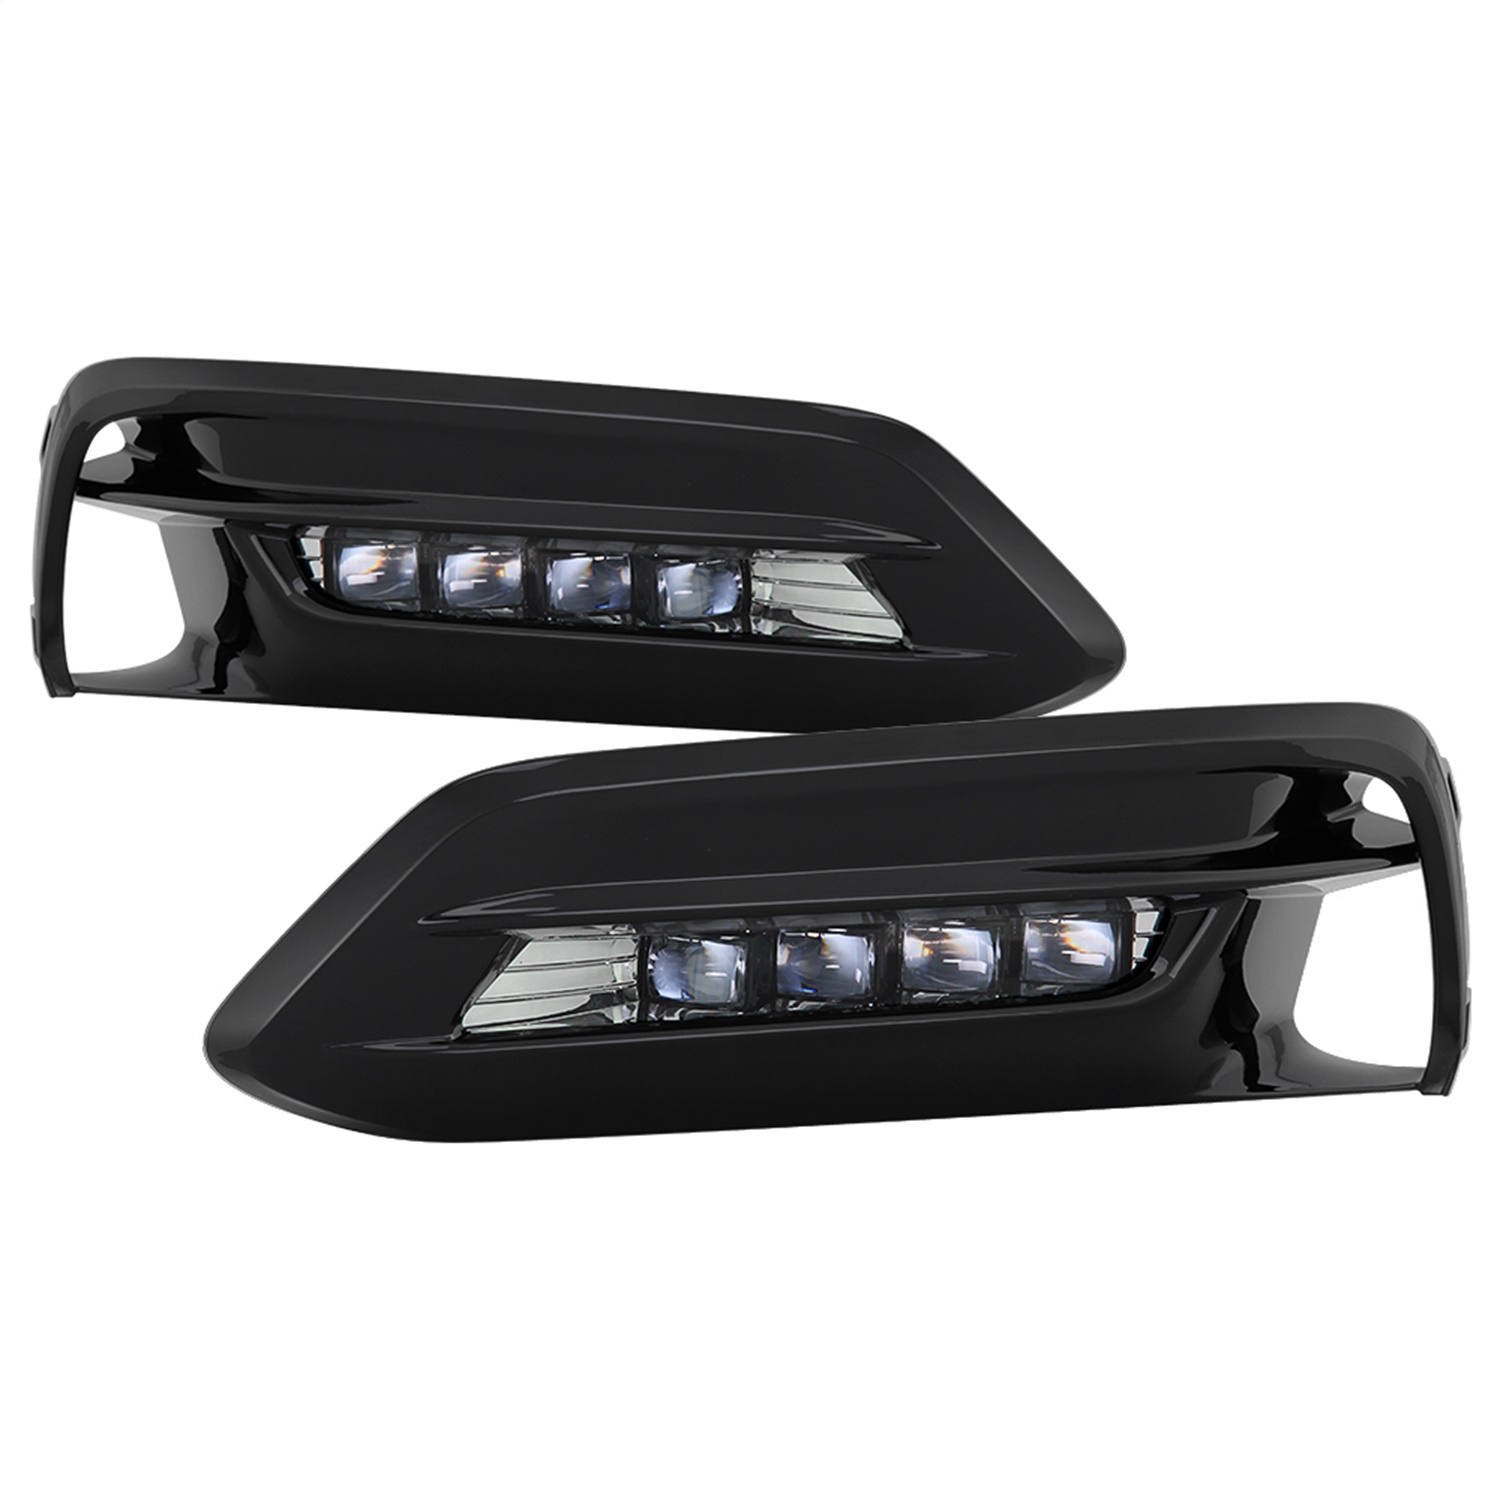 Spyder Auto 5086310 LED Fog Lights Fits 18-19 Accord